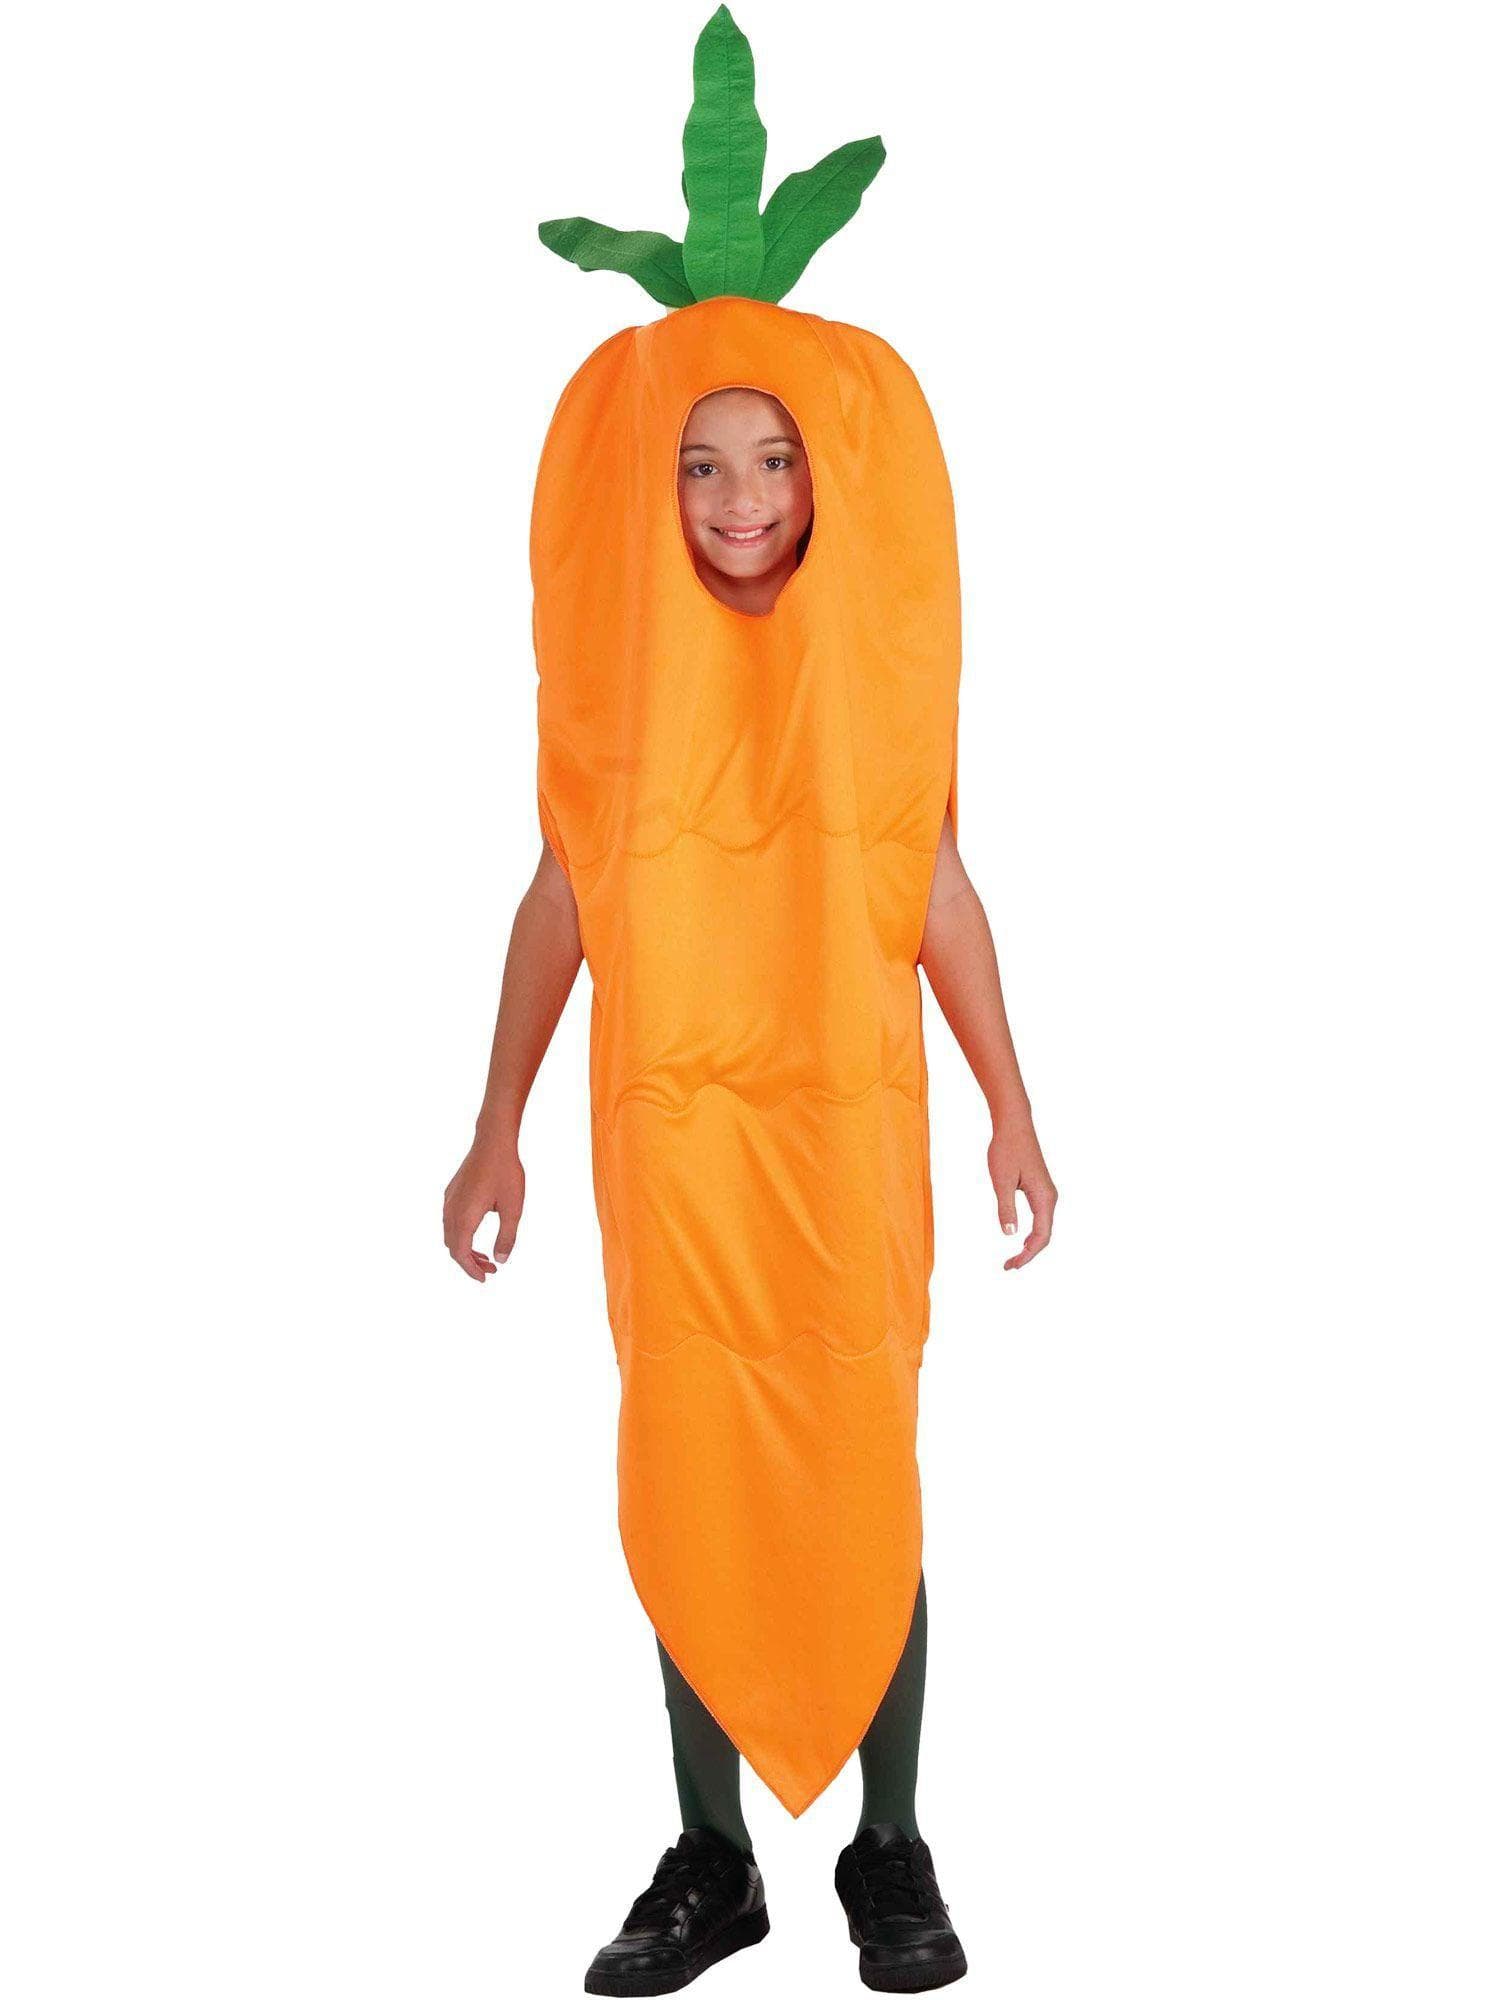 Kid's Carrot Costume - costumes.com